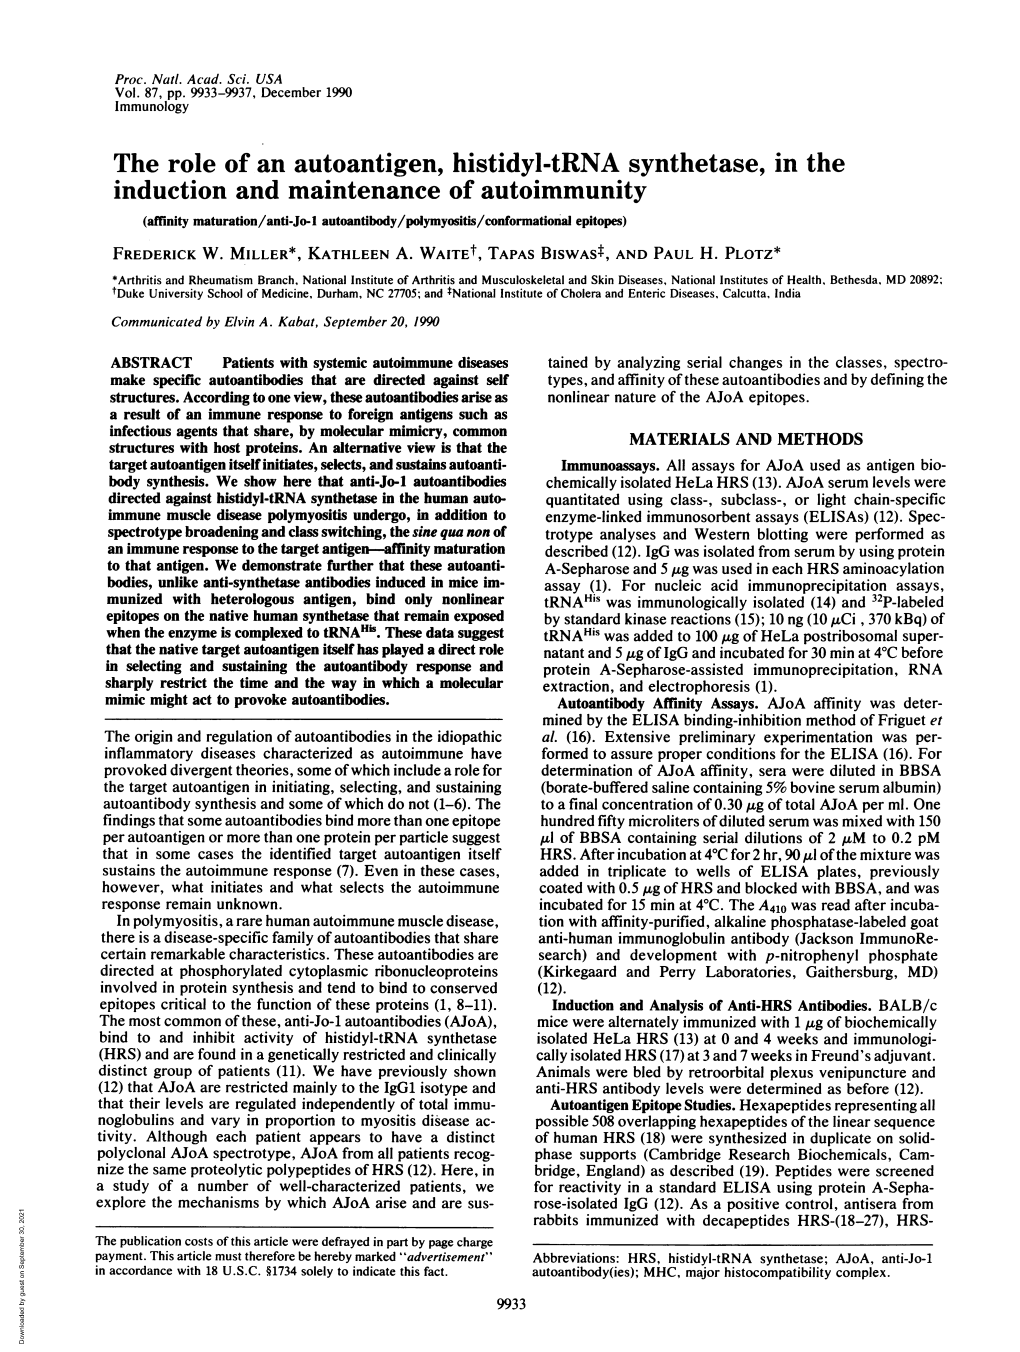 The Role of an Autoantigen, Histidyl-Trnasynthetase, in The